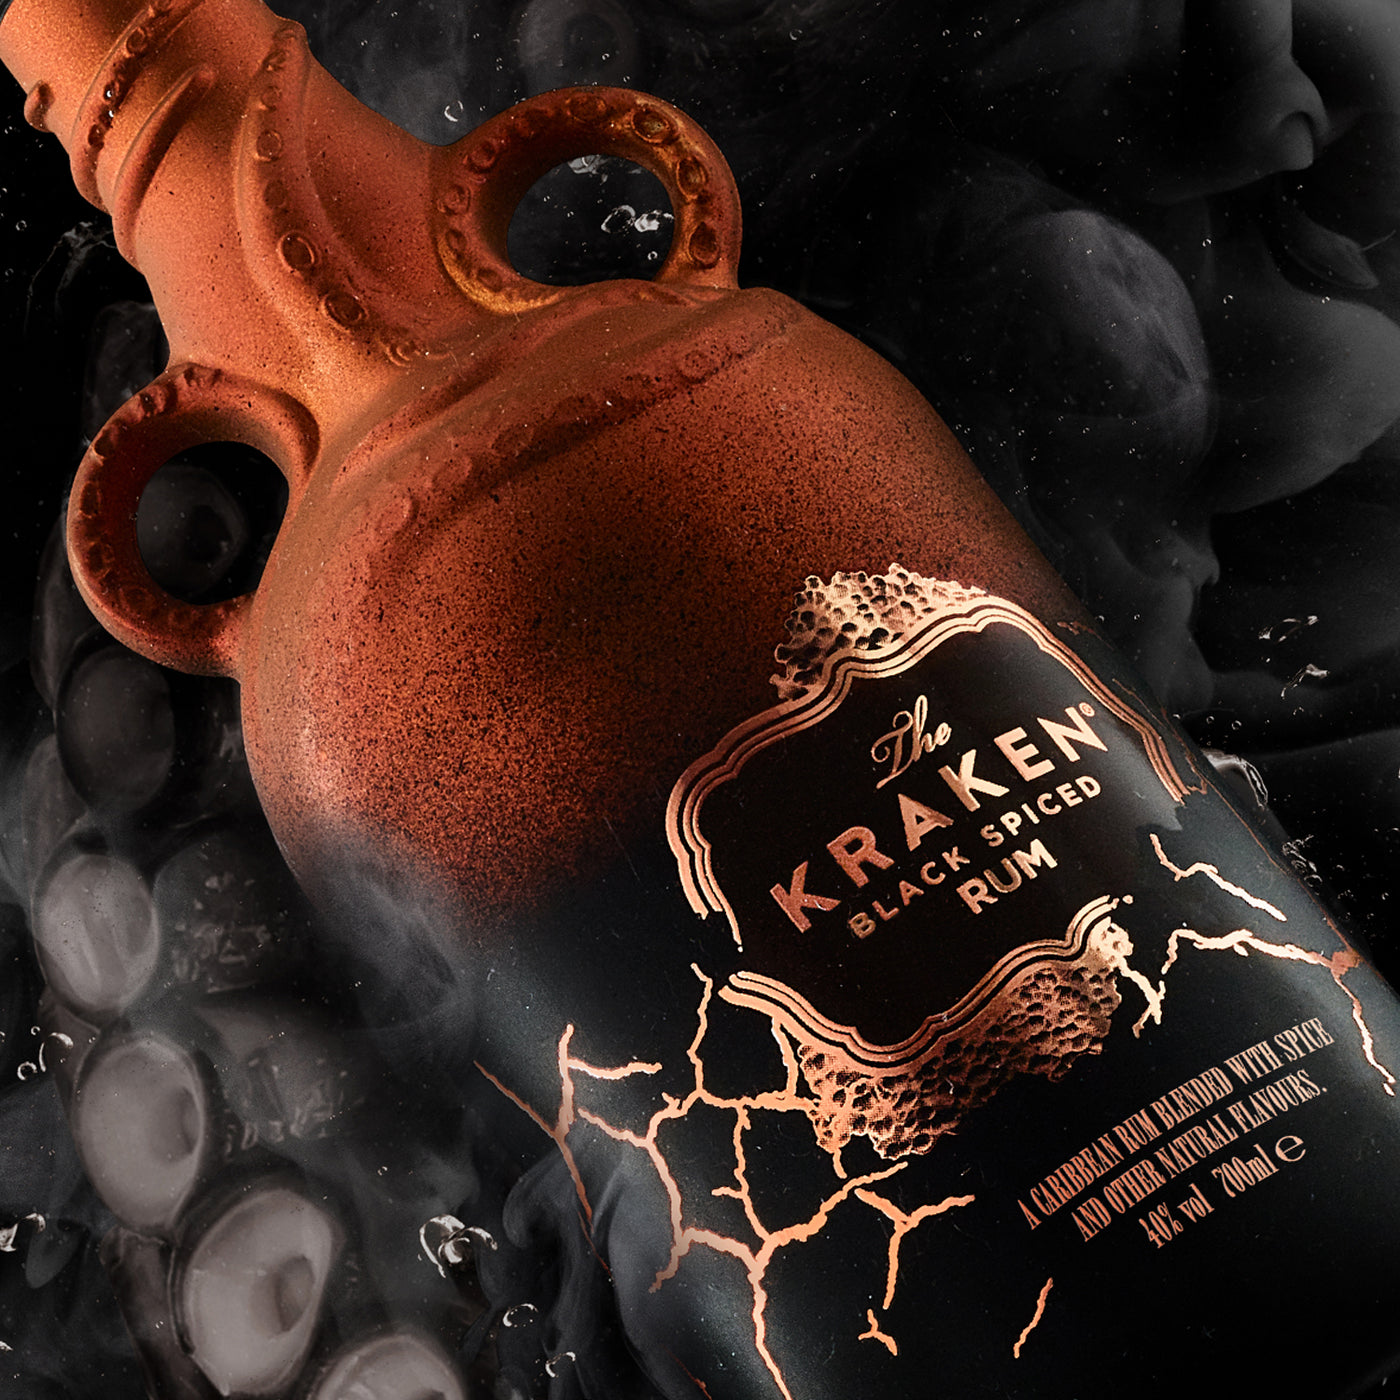 Kraken Black Spiced Rum Limited Edition 2022 Unknown Deep Copper Scar